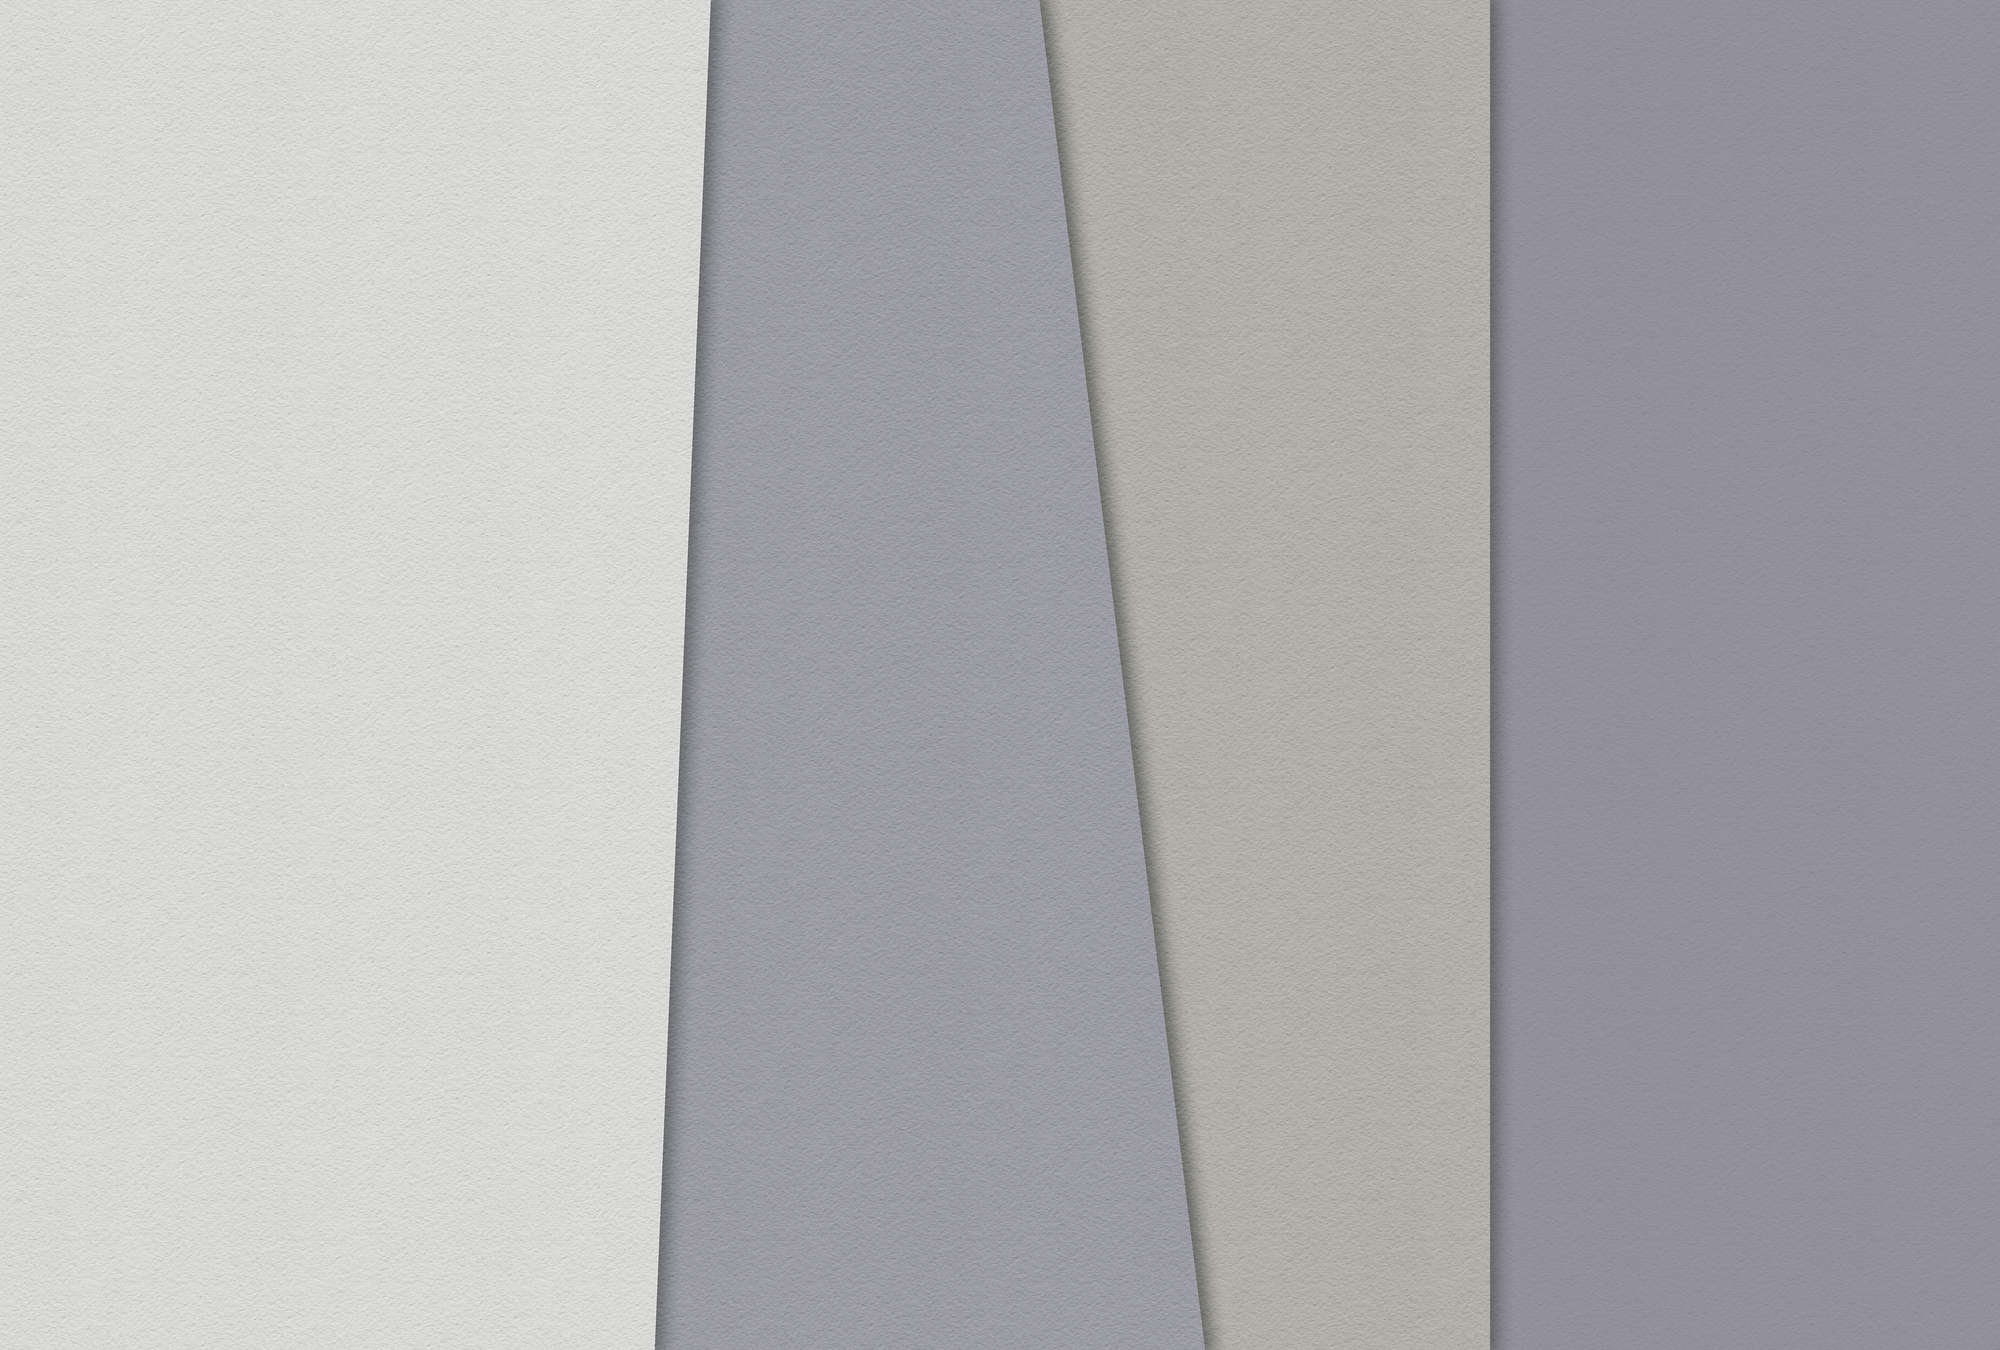             Layered paper 2 - Grafik Fototapete, Büttenpapier Struktur minimalistisches Design – Creme, Grün | Premium Glattvlies
        